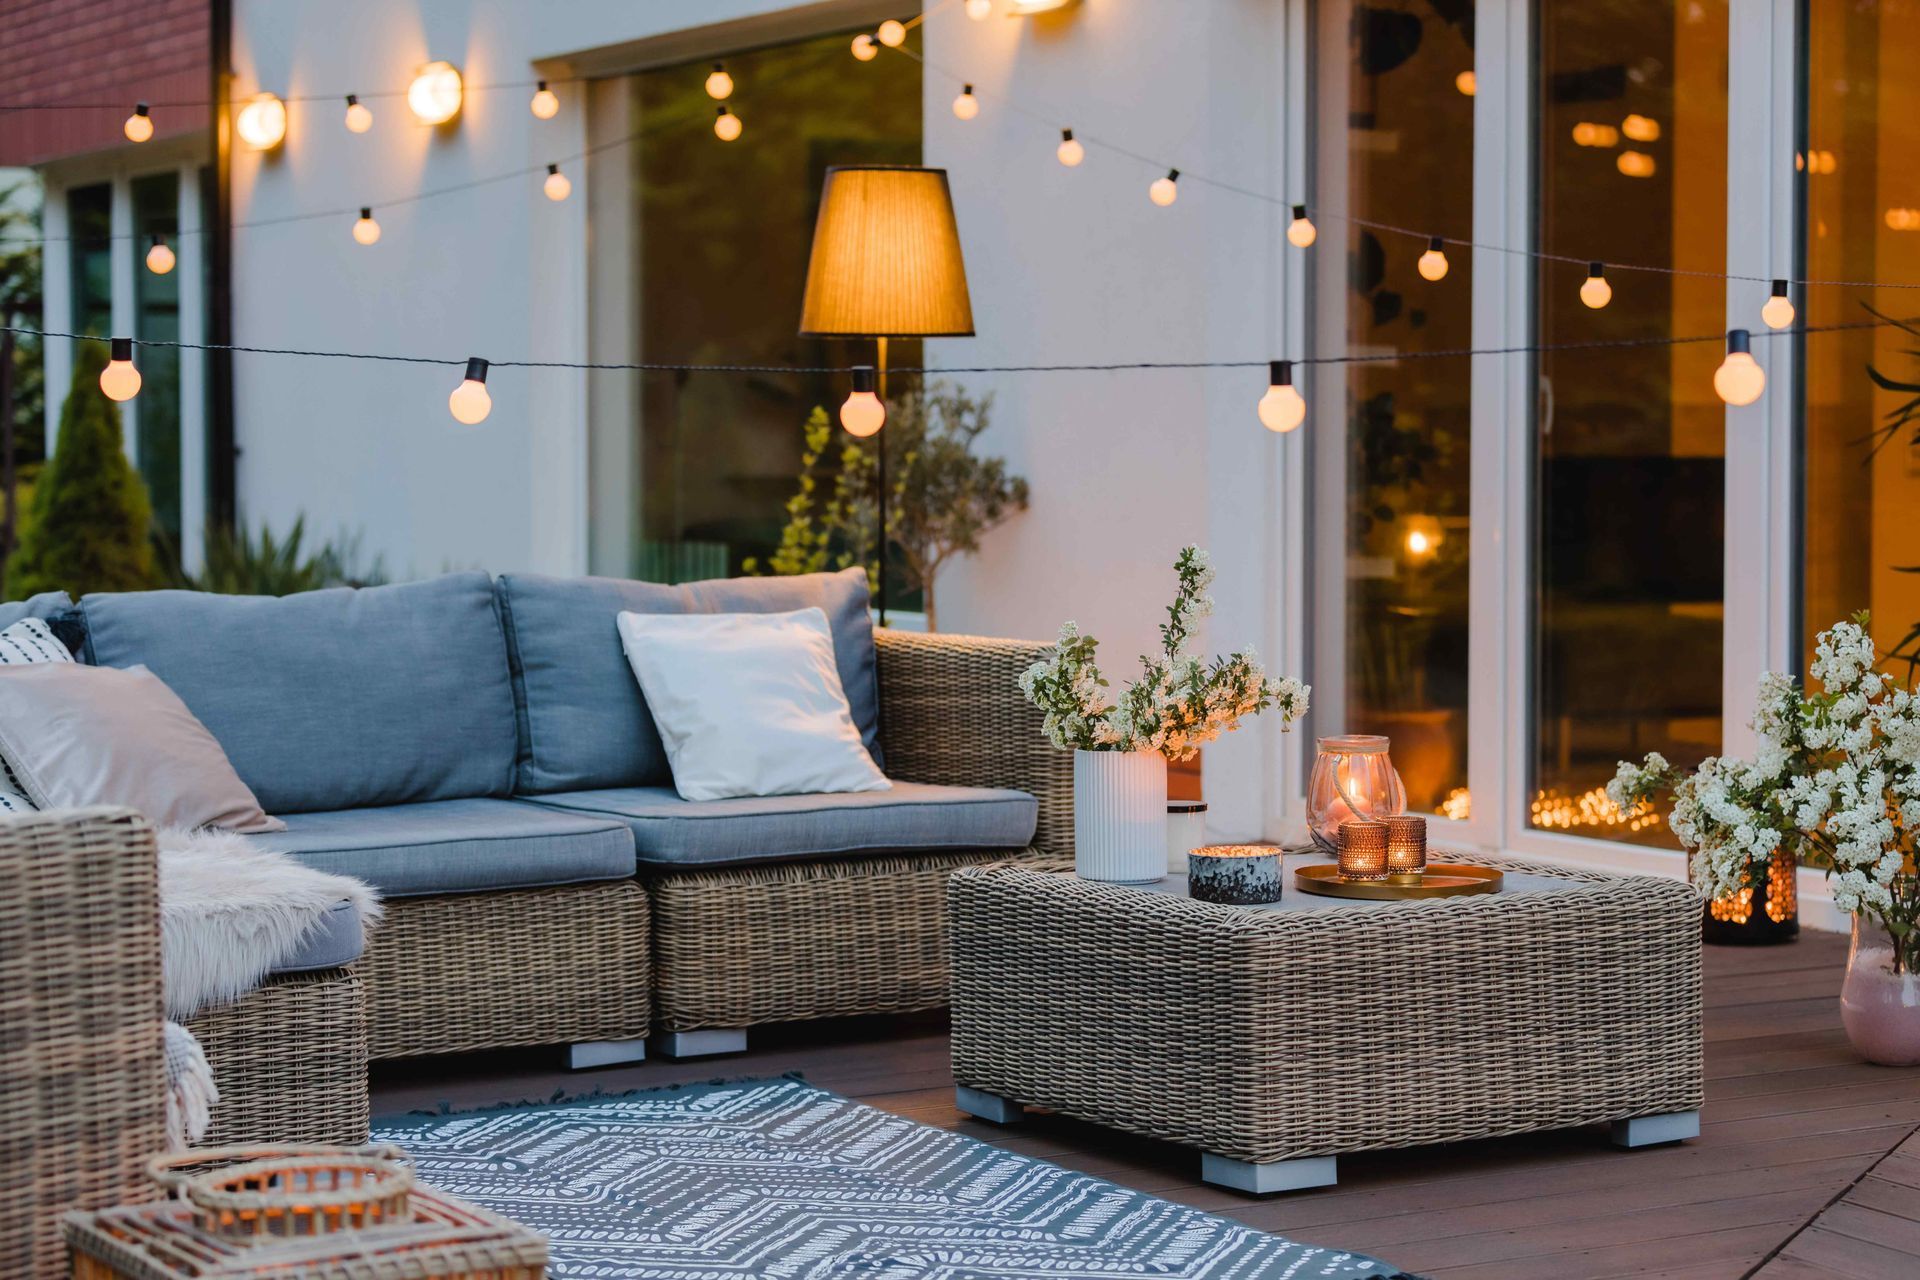 Affordable Backyard Patio In Summer Wicker Furniture In Garland Texas